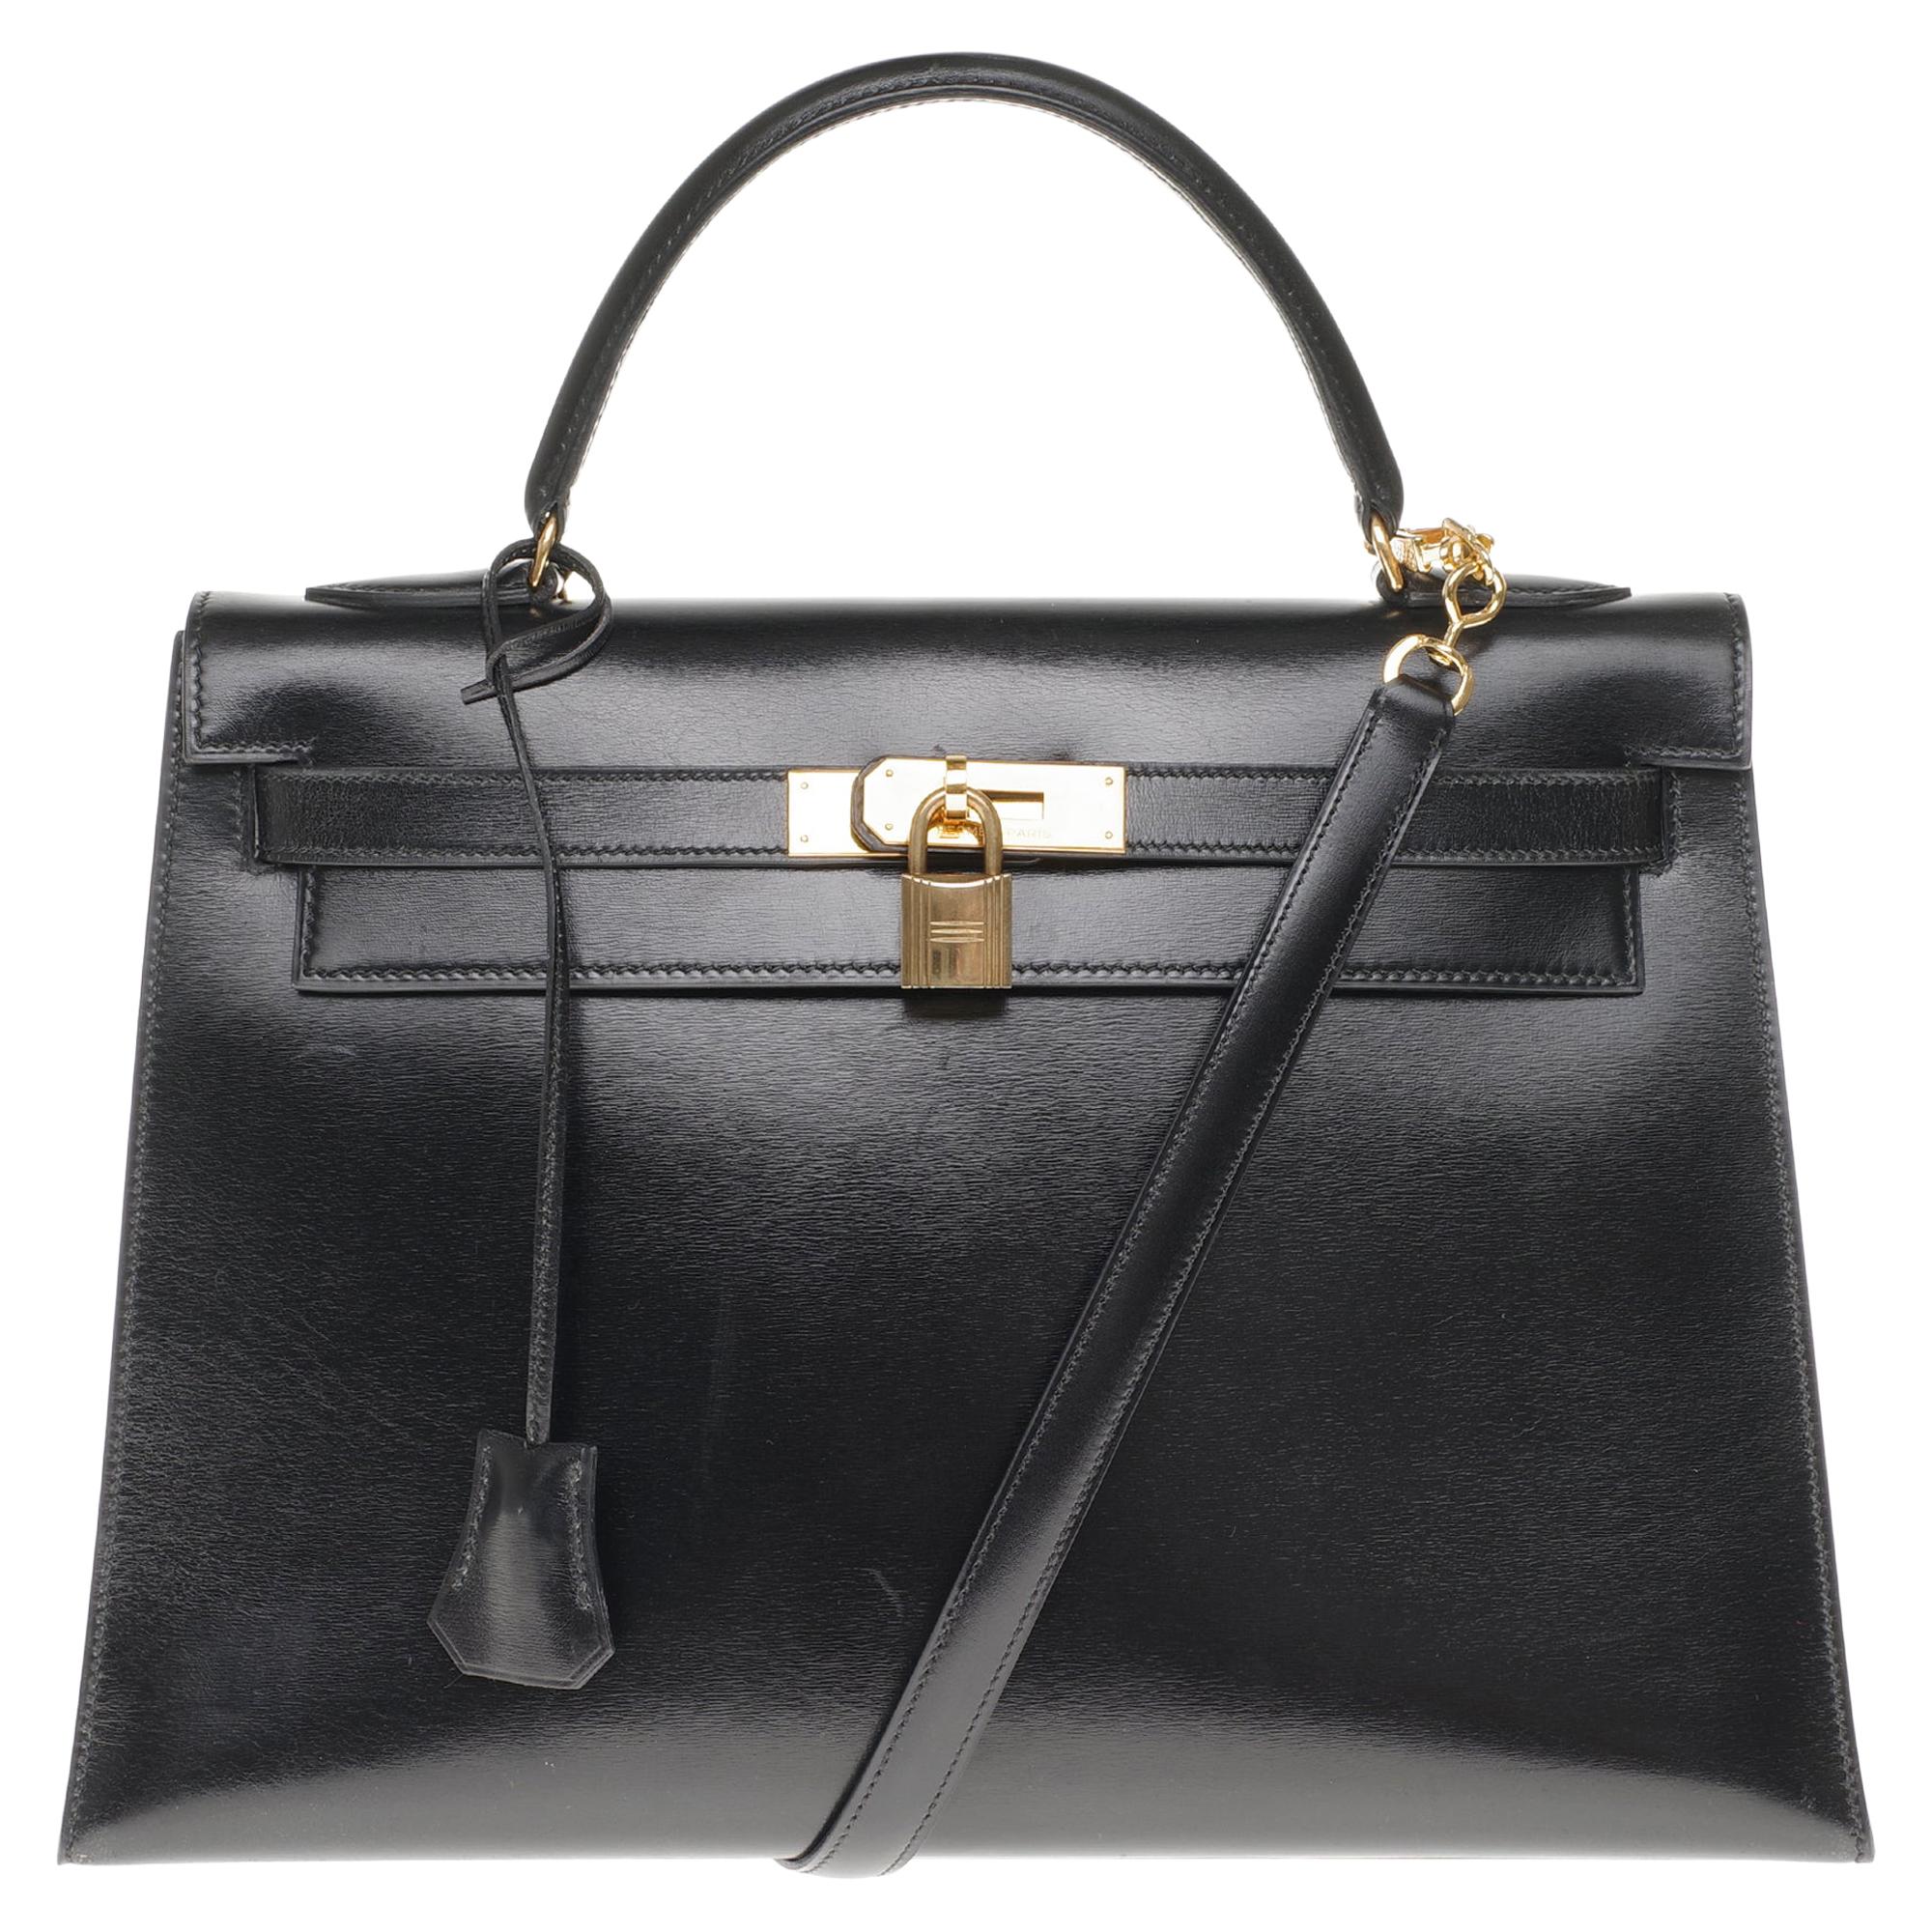 Hermès Kelly 32cm sellier handbag with strap in black calfskin, gold hardware!